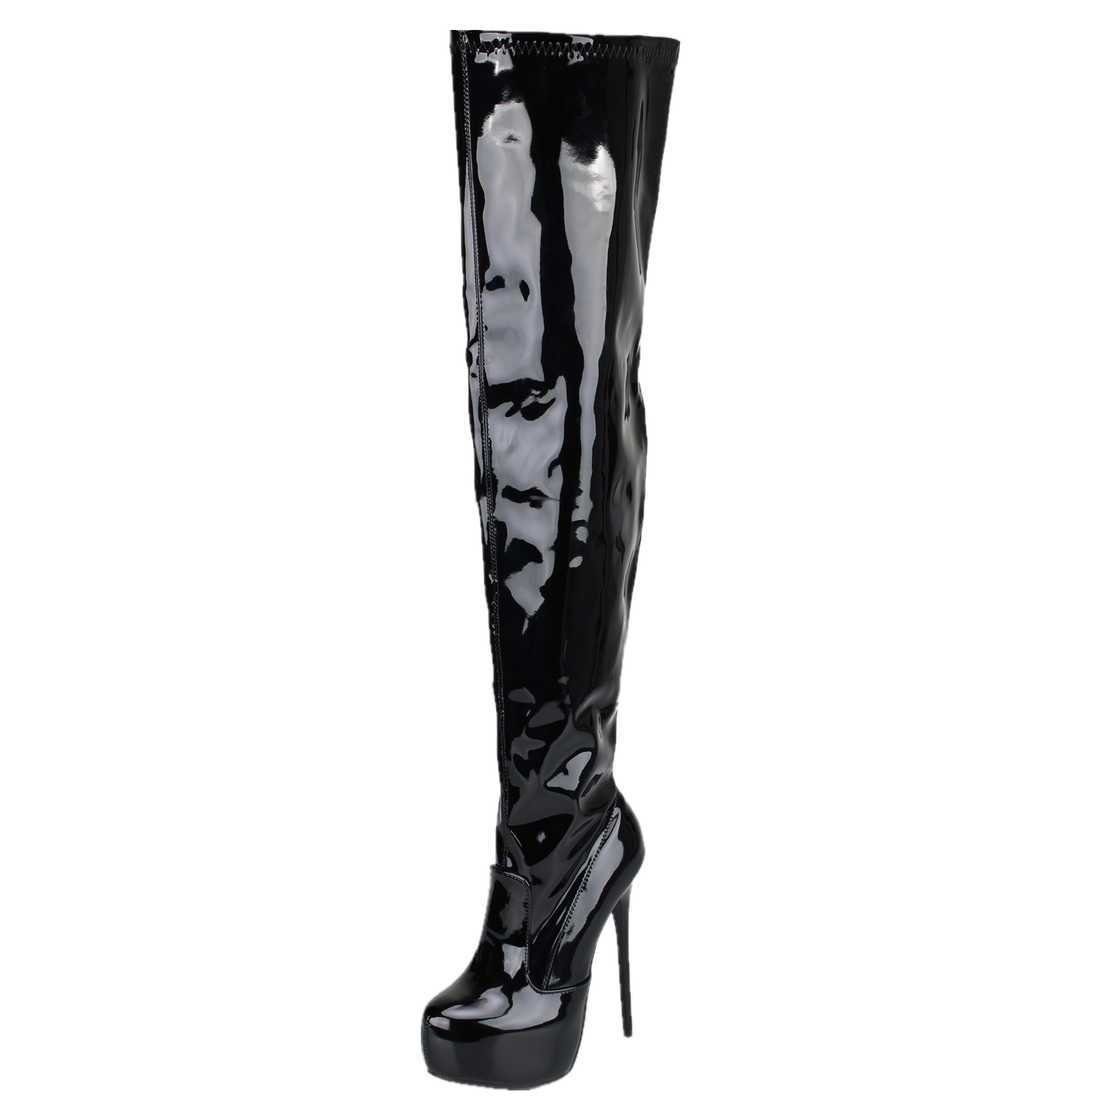 Erogance Erogance Stretchlack Overknee Stiefel E3000 Größe 36 - 46 High-Heel-Stiefelette  vegan